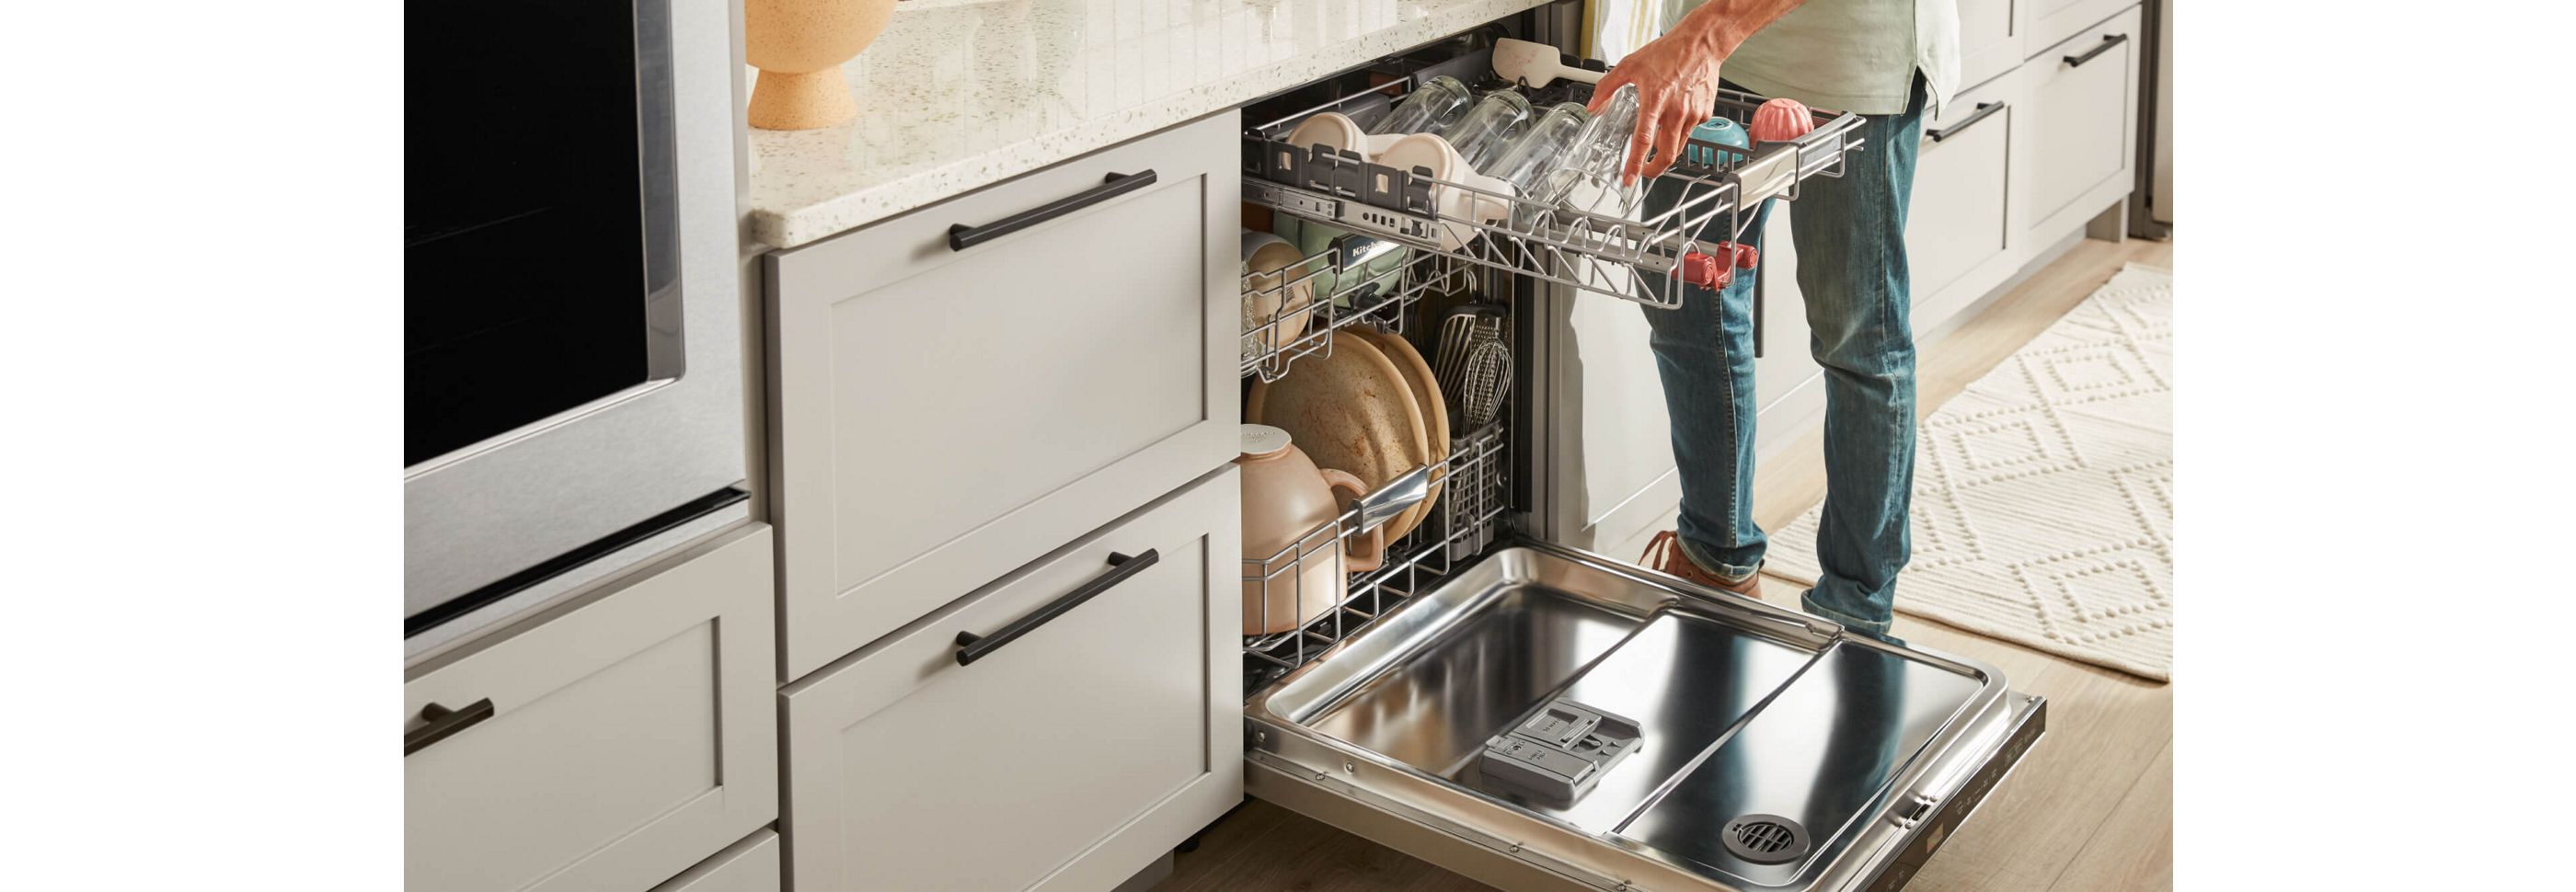 KitchenAid Dishwasher